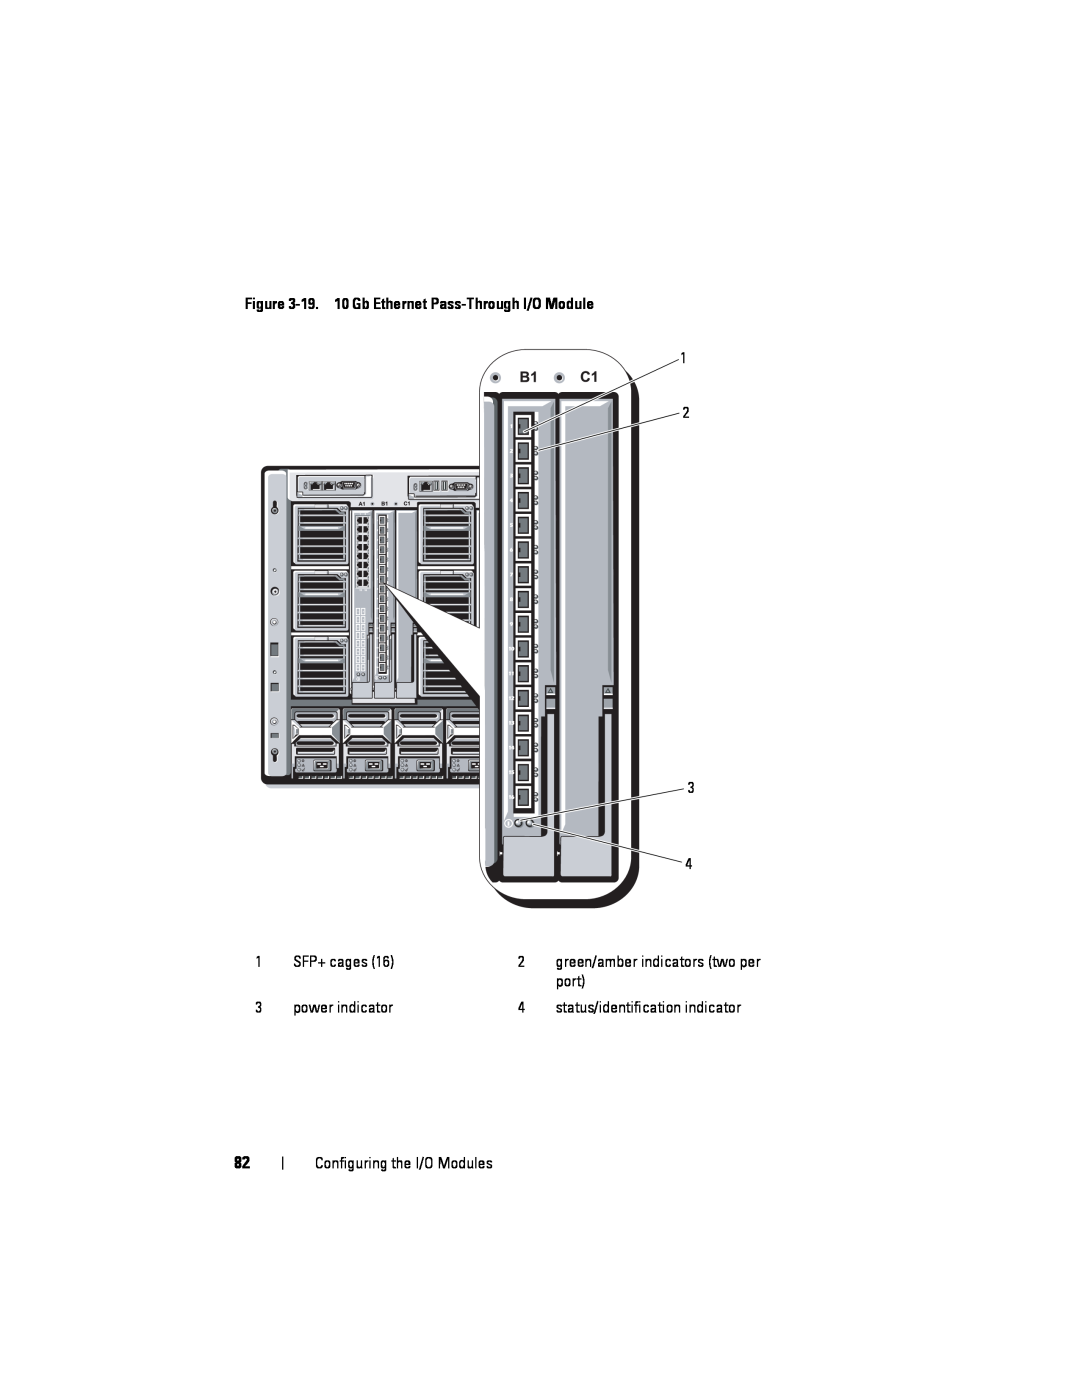 Dell M1000E 19. 10 Gb Ethernet Pass-Through I/O Module, SFP+ cages, port, power indicator, Configuring the I/O Modules 